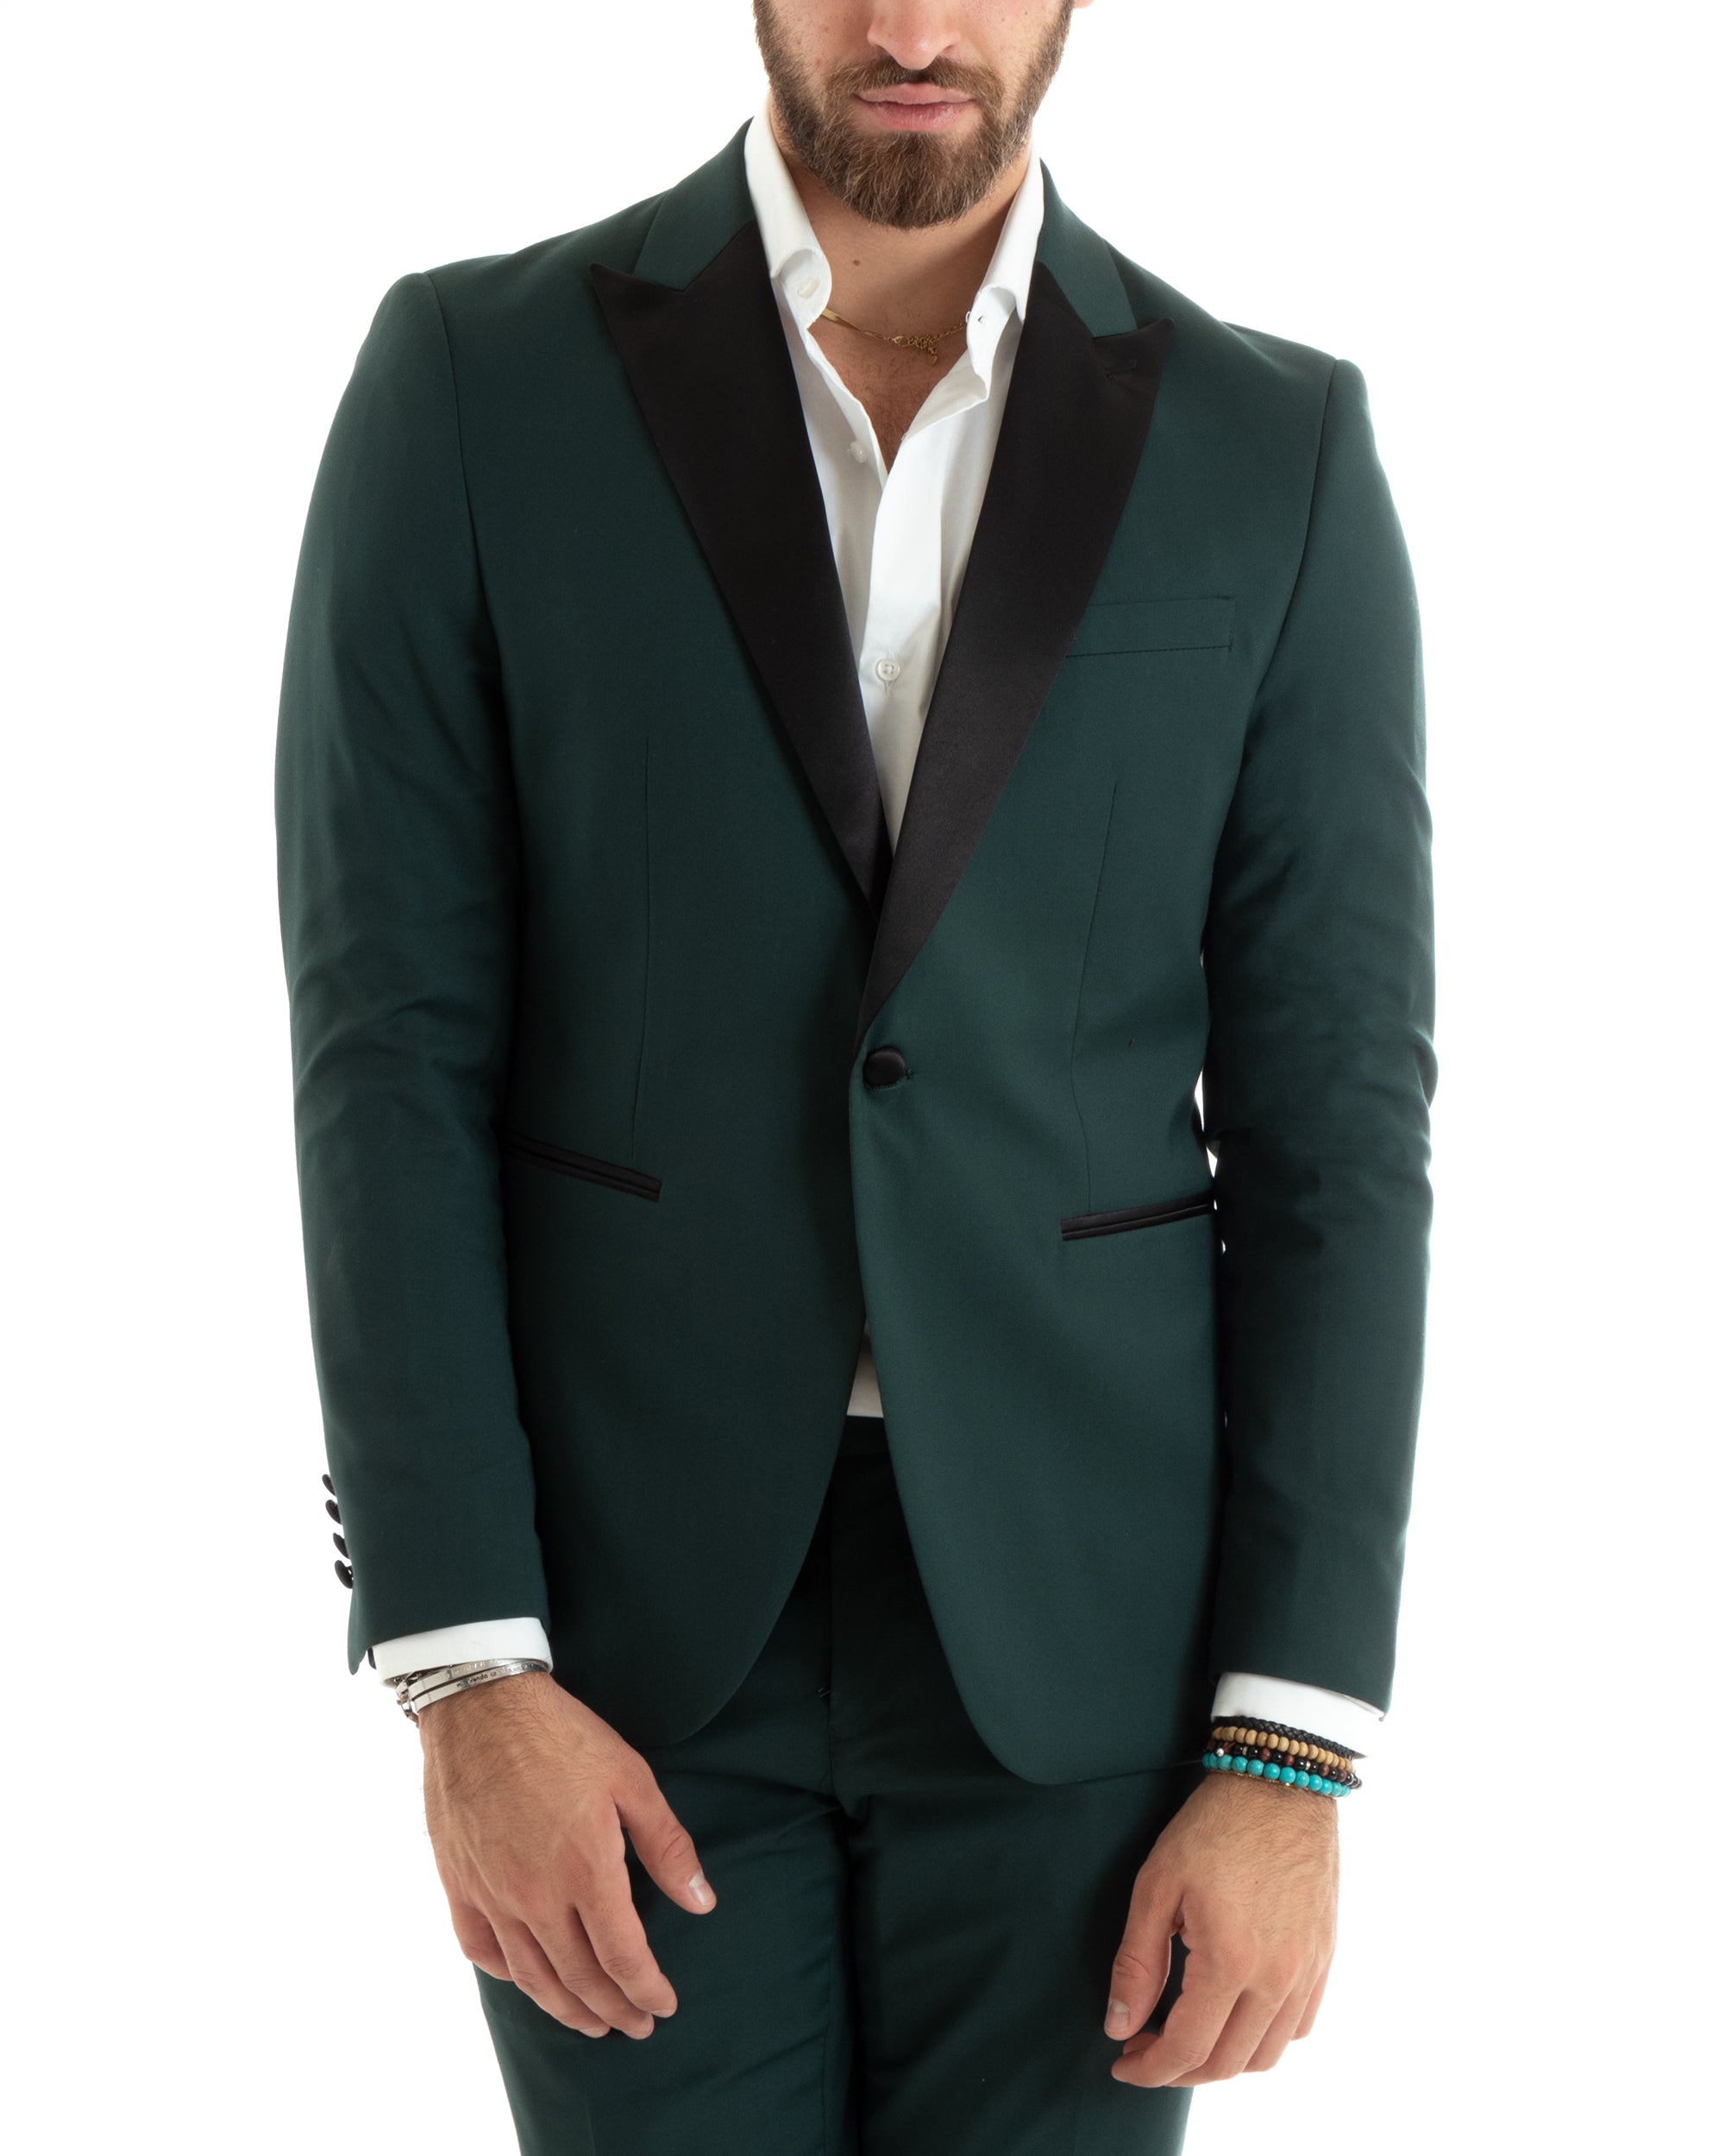 Abito Uomo Monopetto Vestito Smoking Rever Raso Completo Giacca Pantaloni Verde Elegante GIOSAL-OU2424A